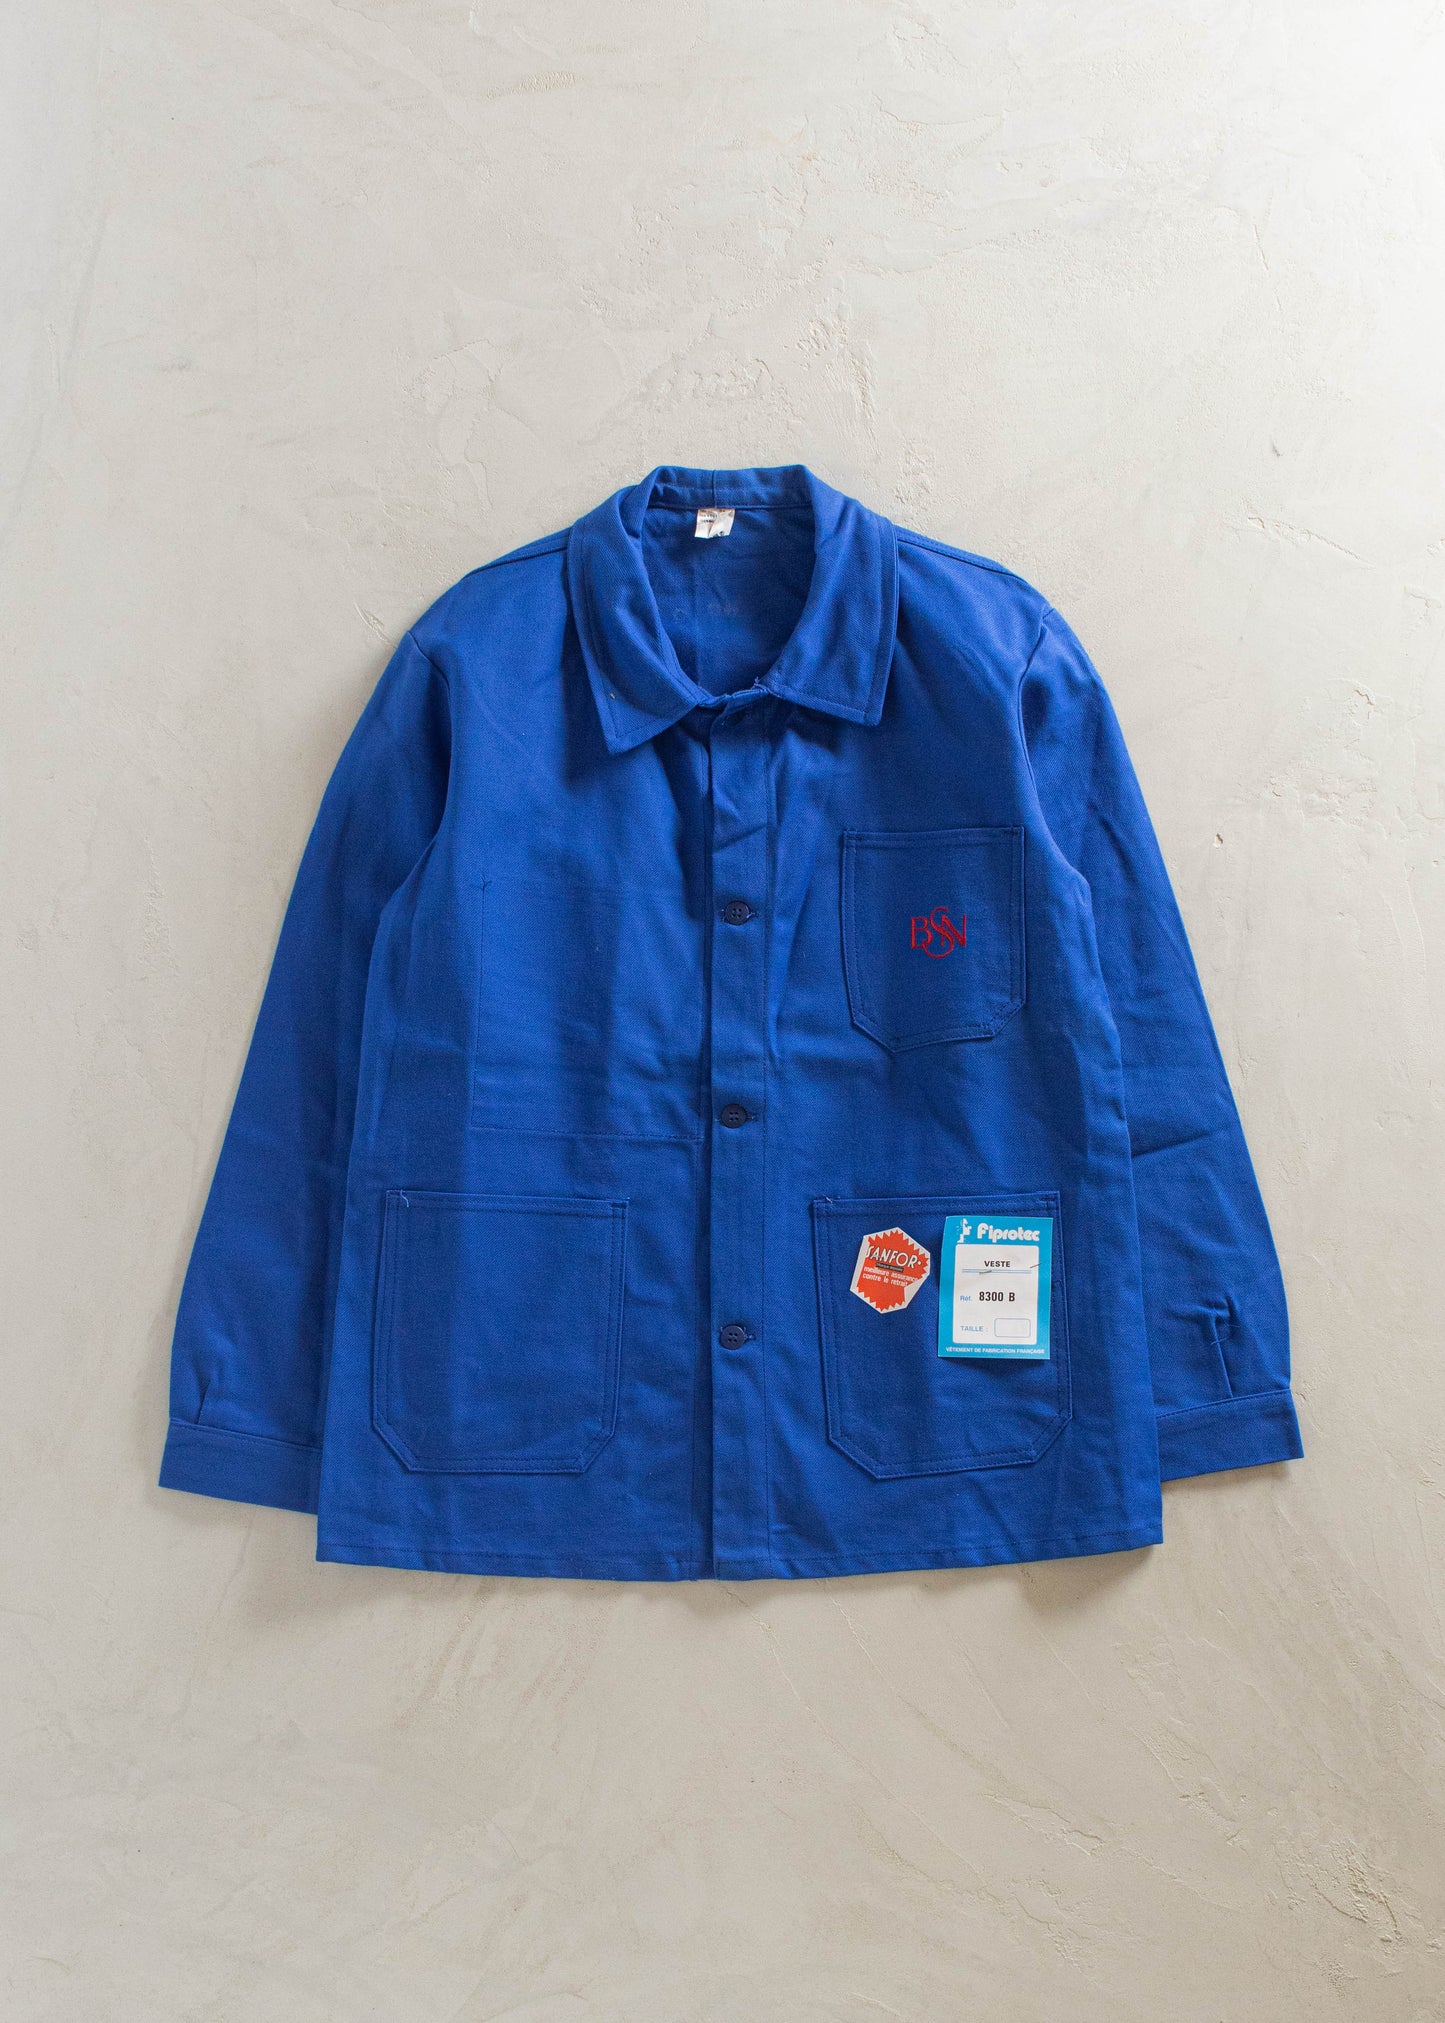 1970s Deadstock Sanforized French Workwear Chore Jacket Size M/L